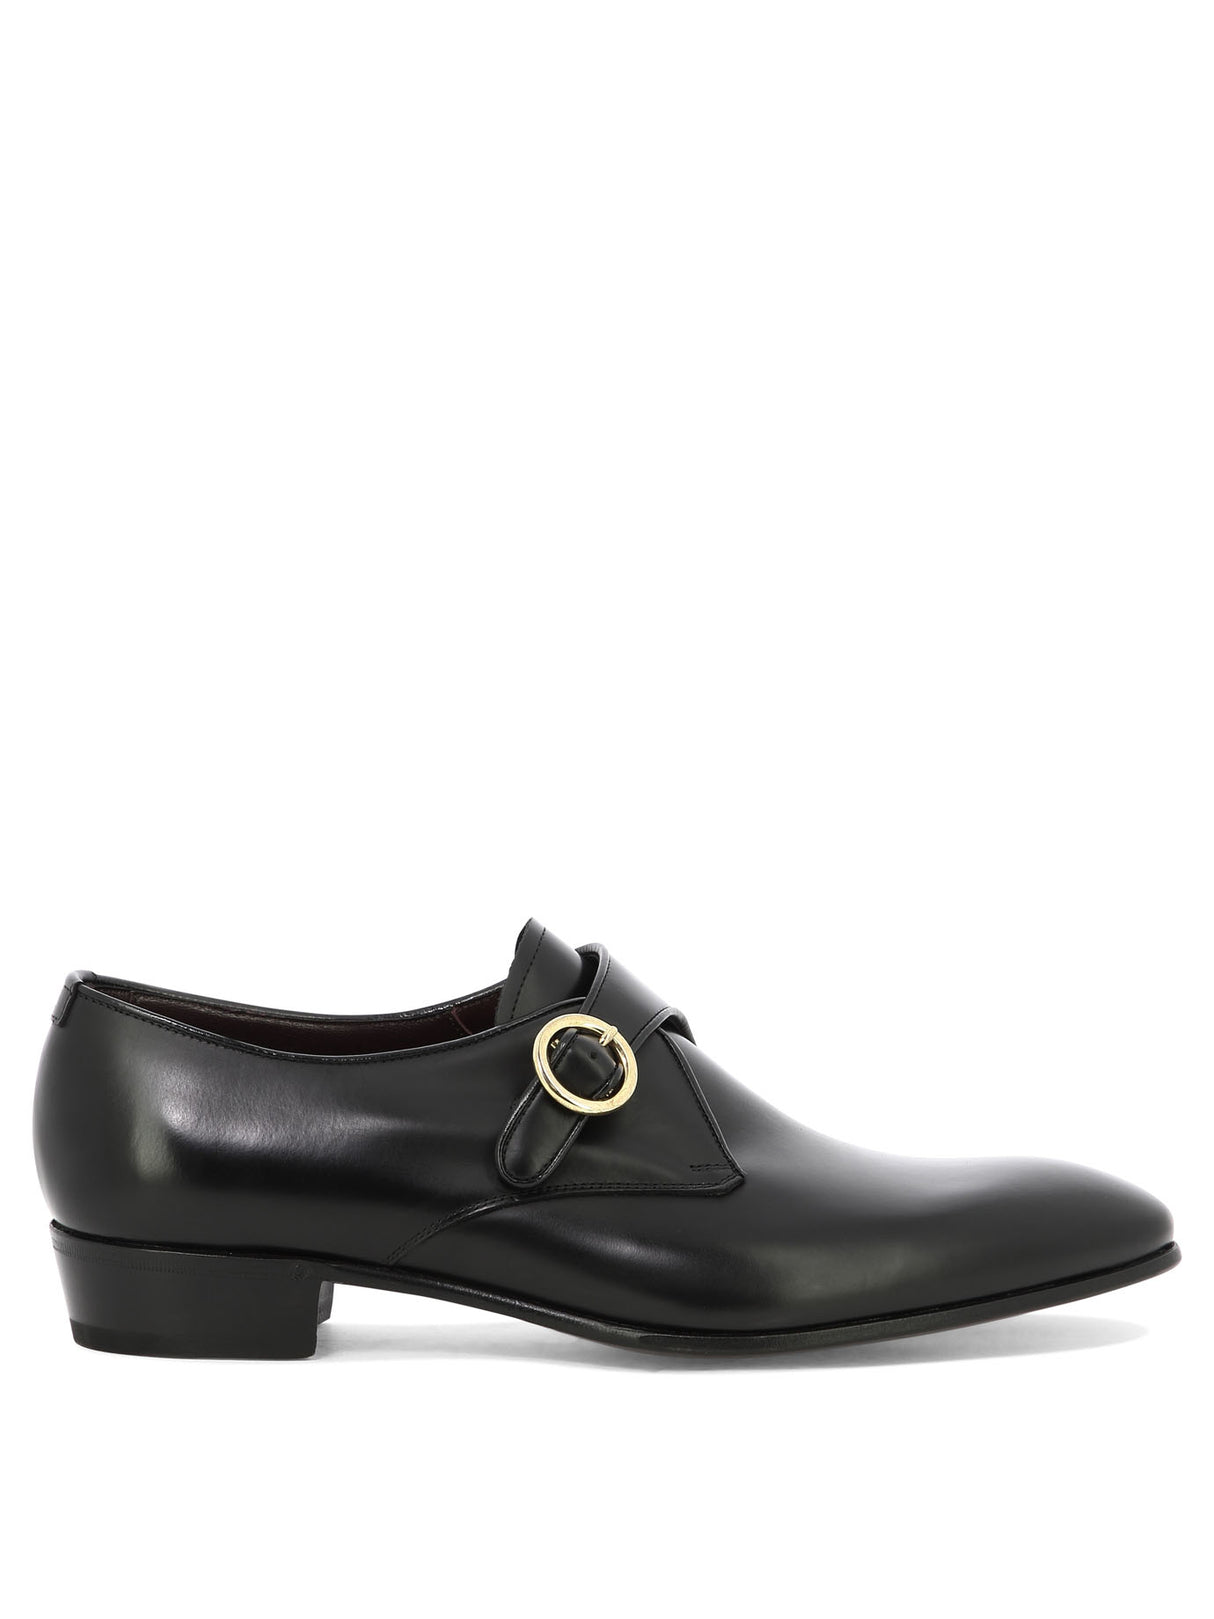 LARDINI Classic Black Leather Monk Shoes for Men